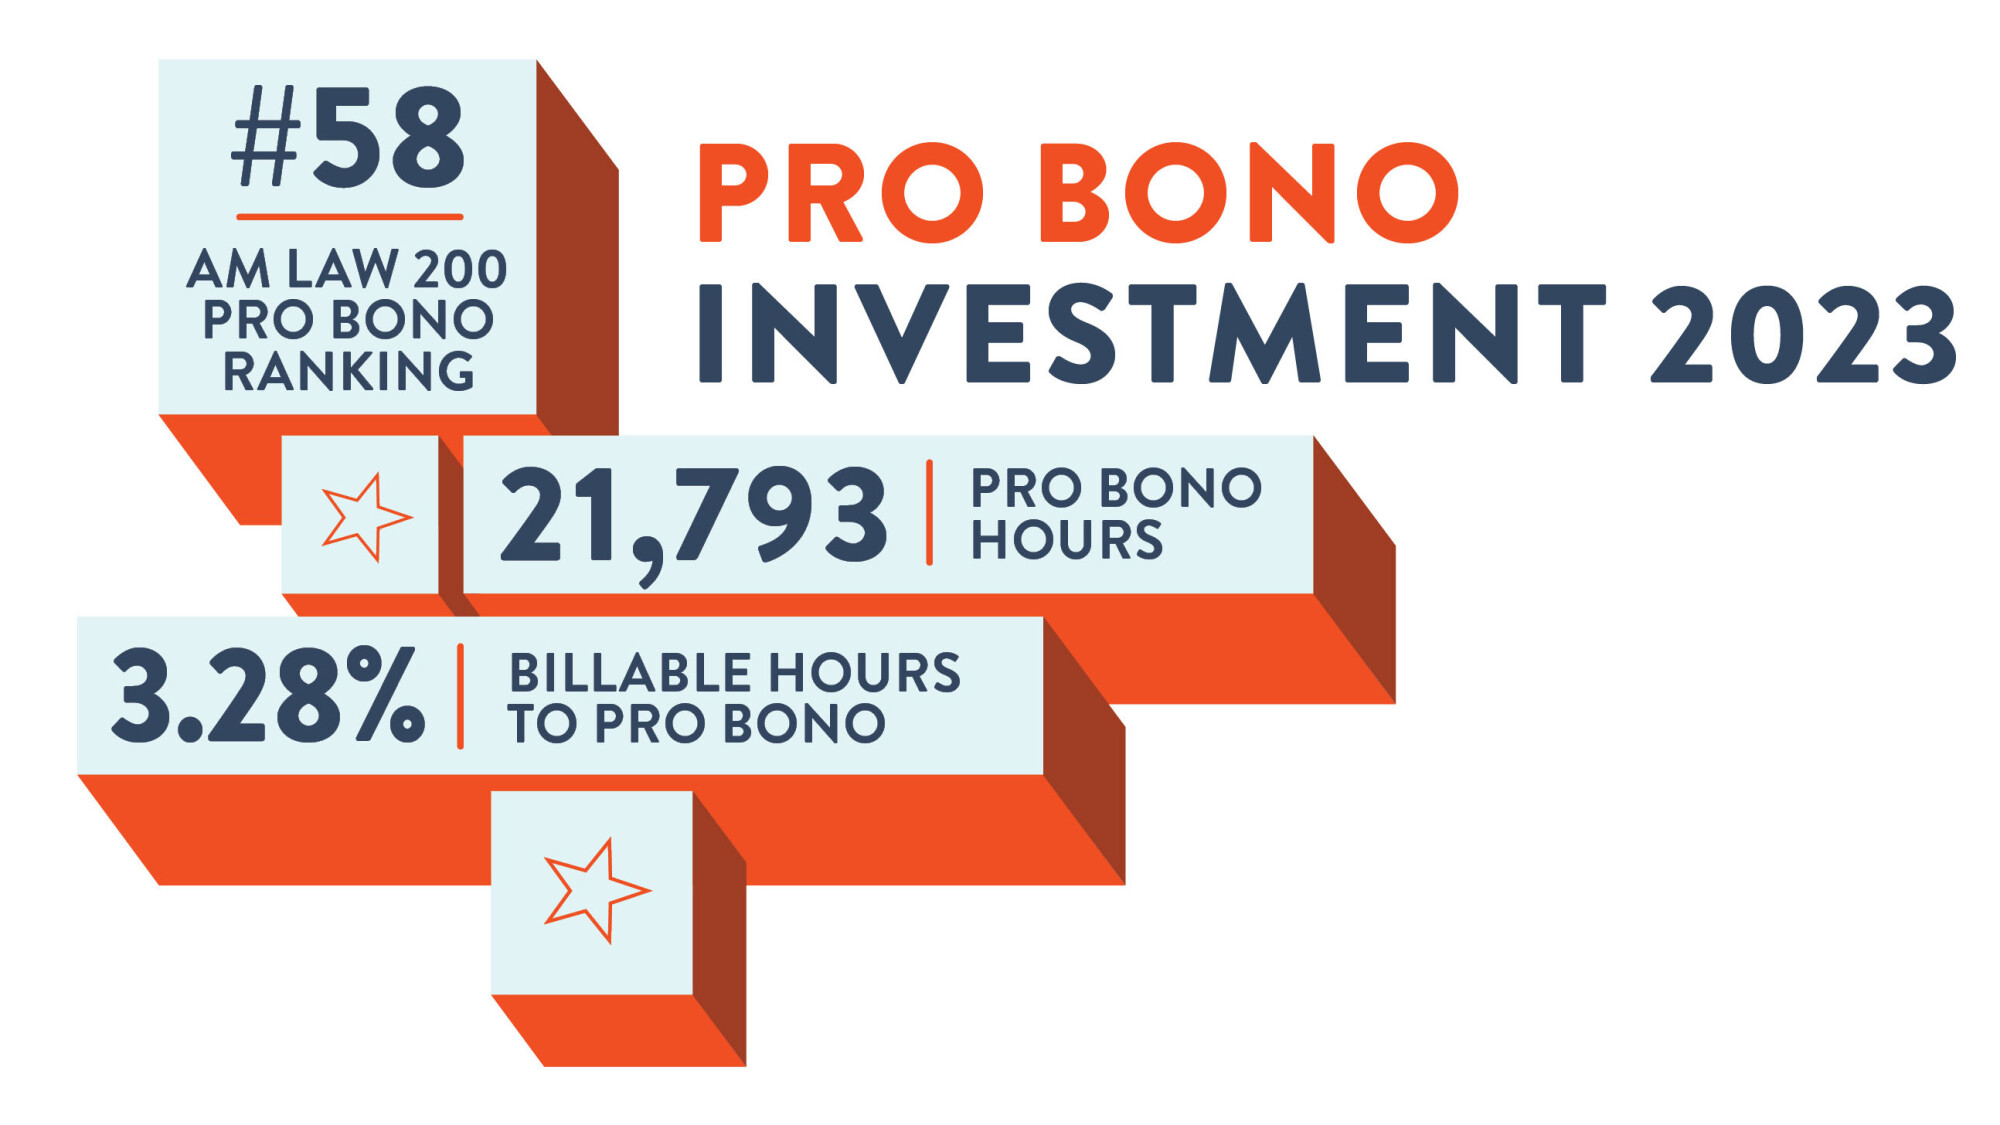 Pro Bono Investment 2023